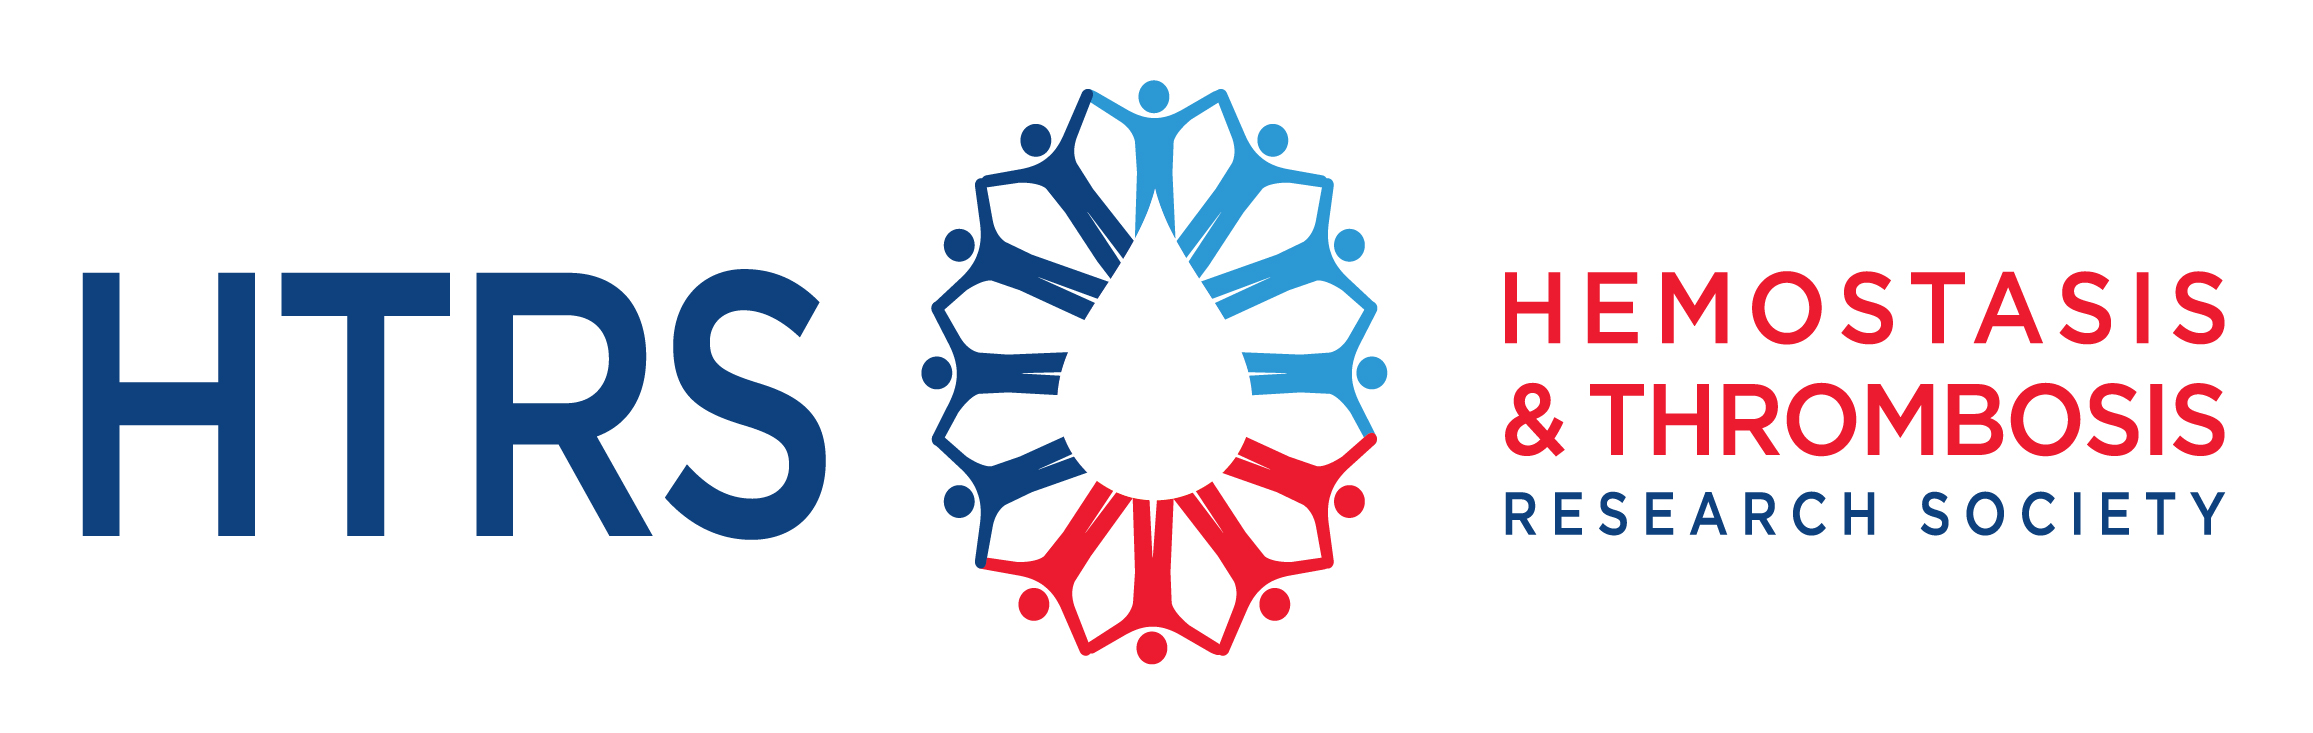 Hemostasis & Thrombosis Research Society logo